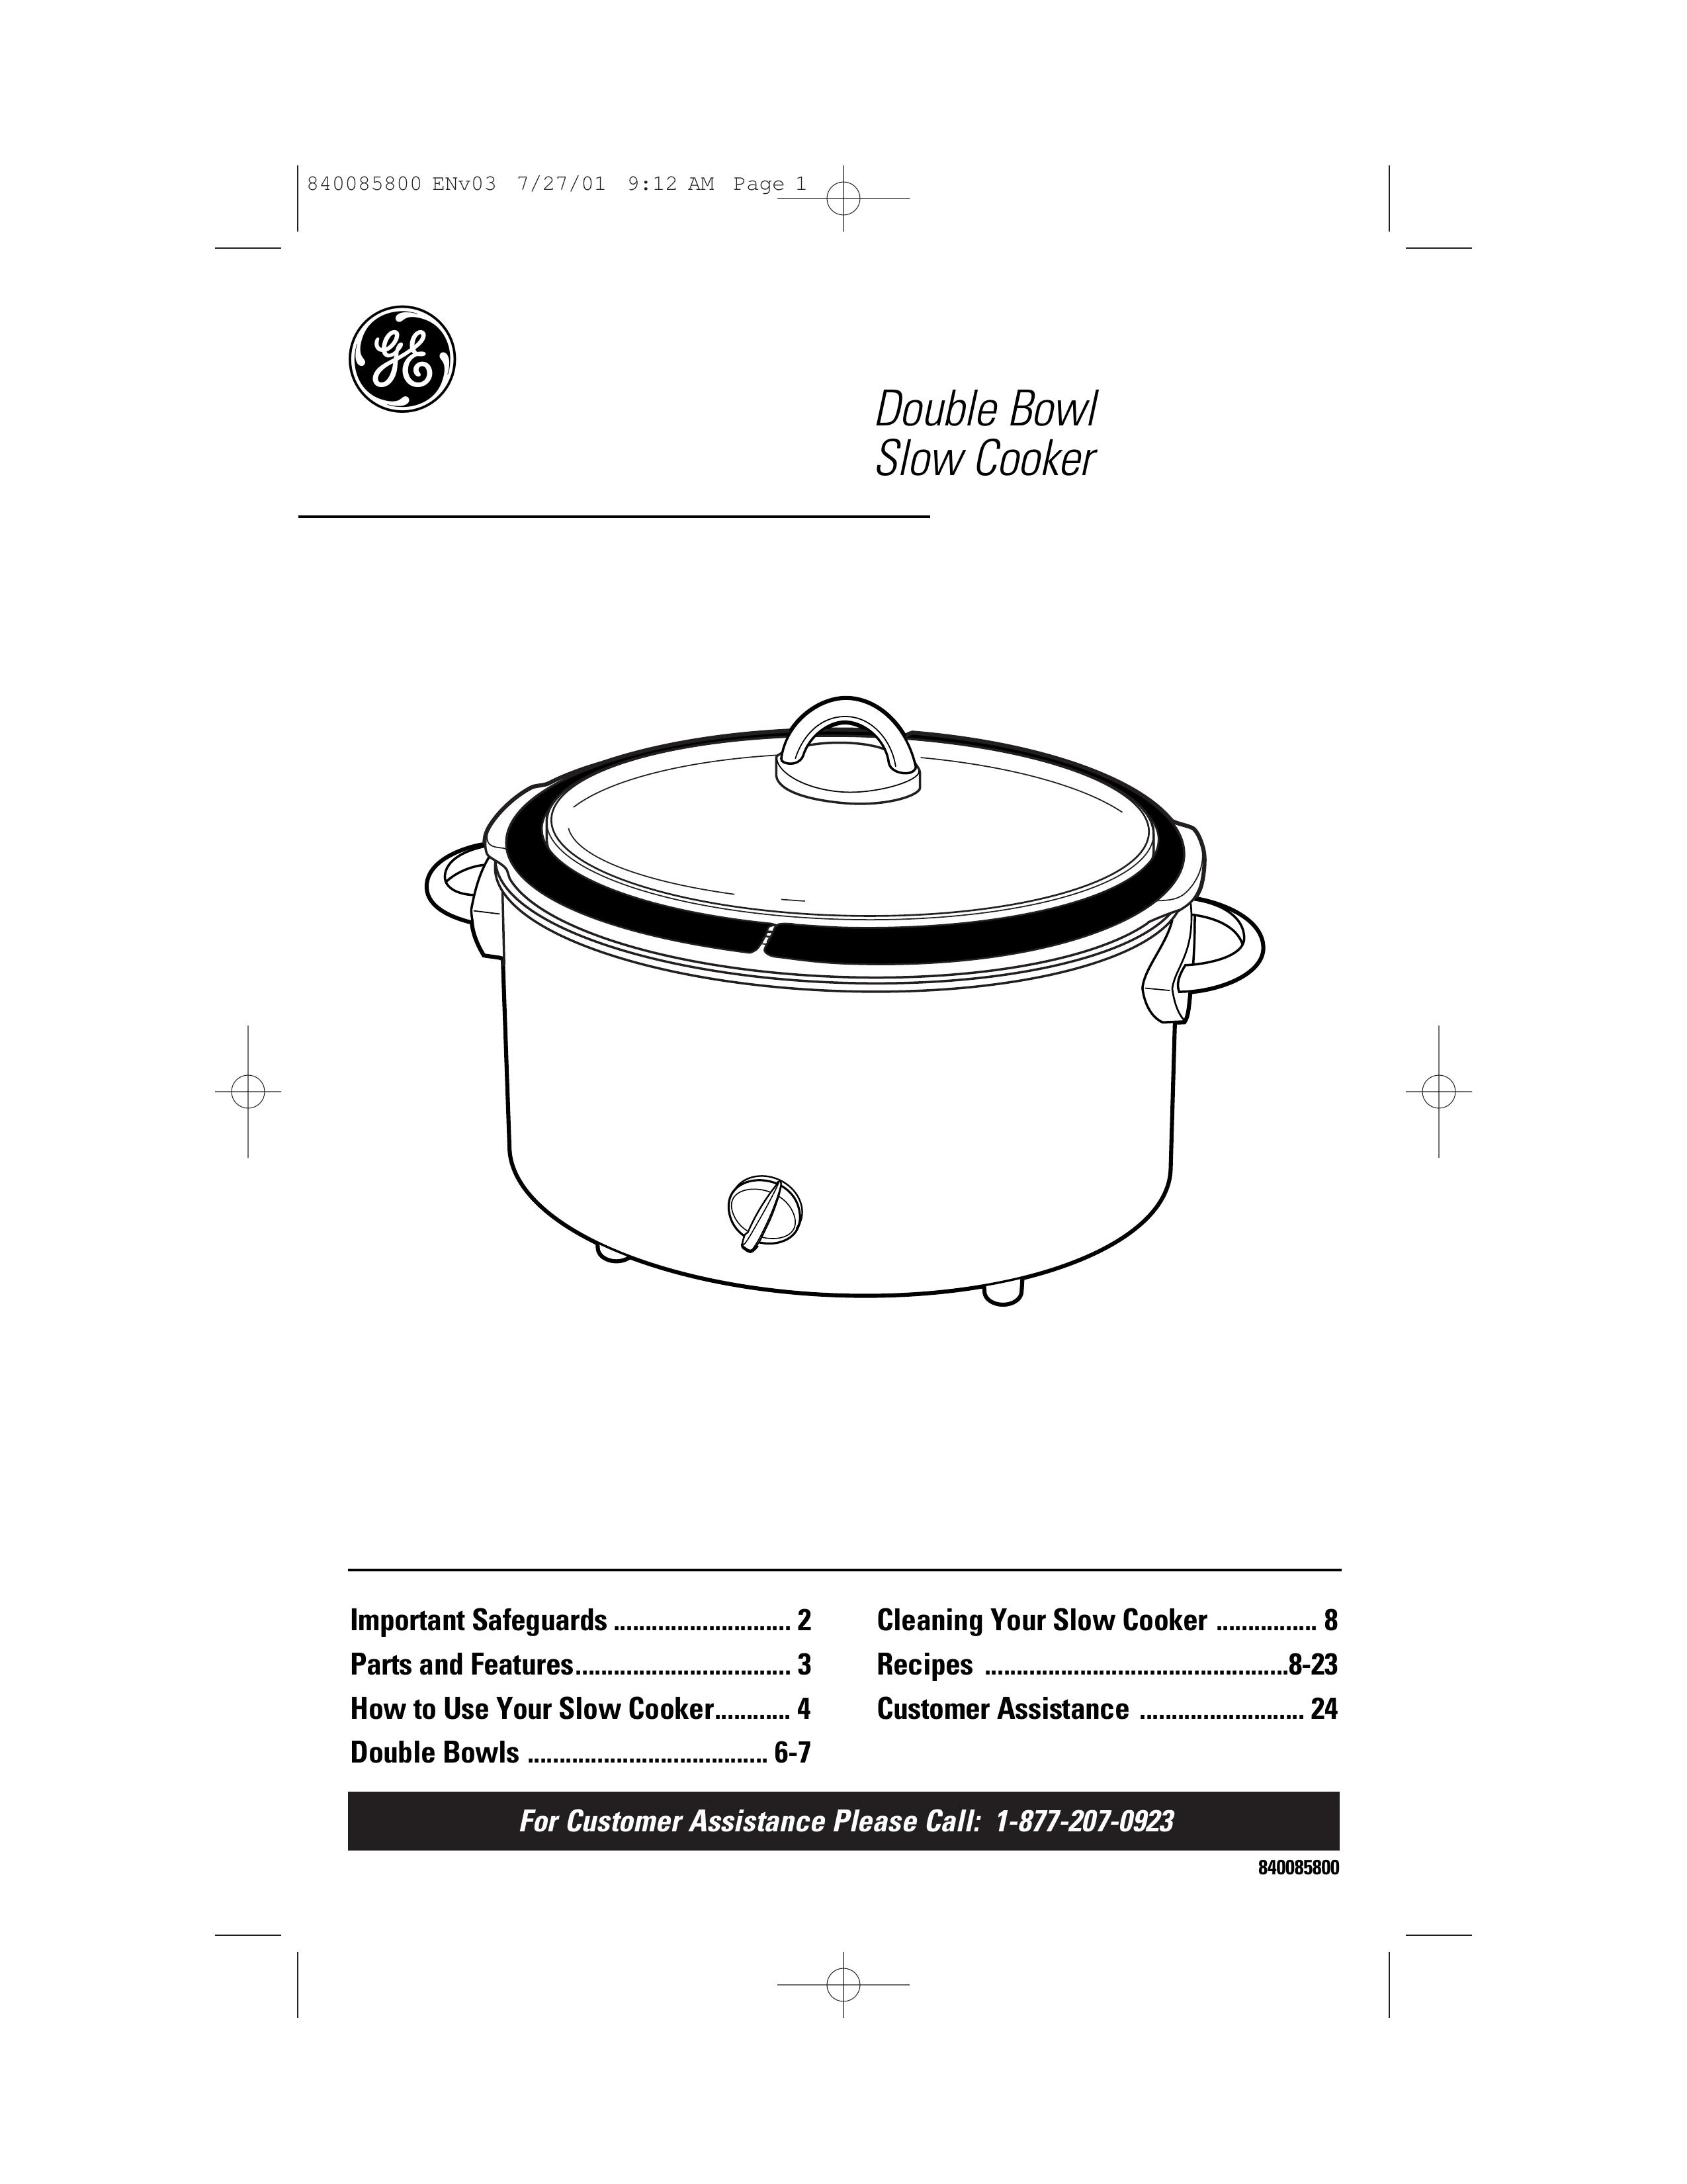 GE 840085800 Slow Cooker User Manual